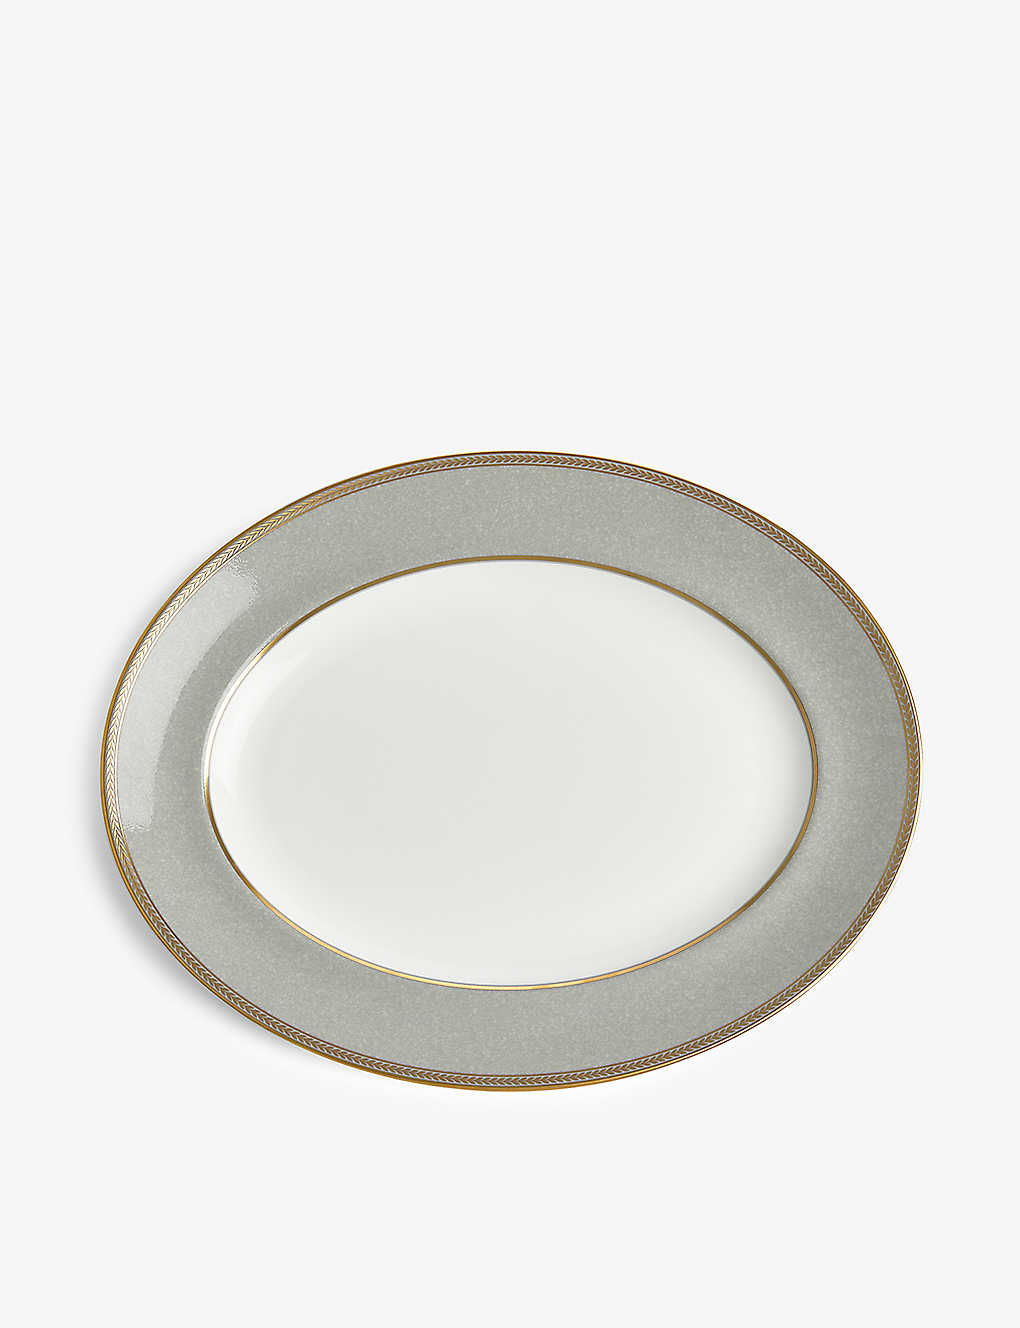 Wedgwood Renaissance Gold Oval Platter Plate 35cm